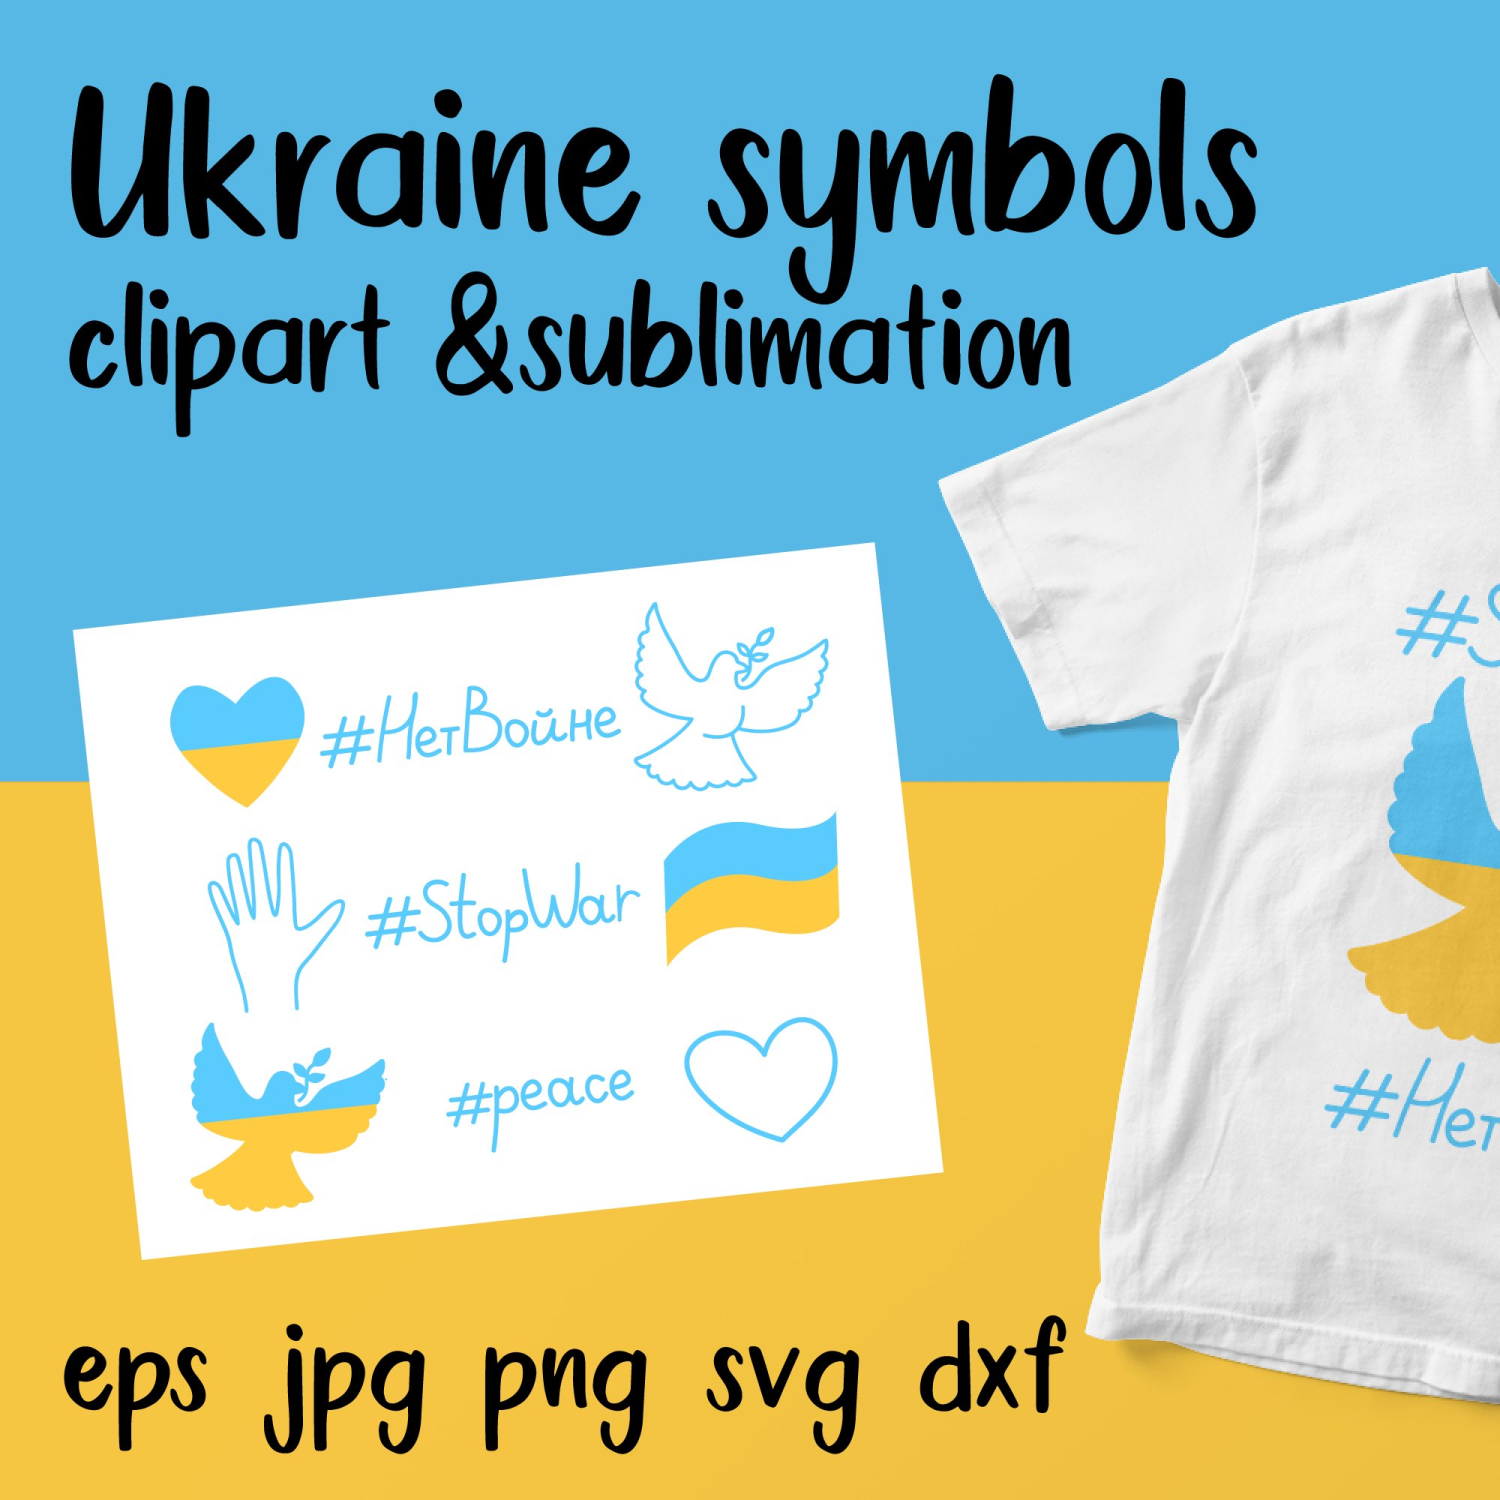 Ukraine symbols and sublimation dove.